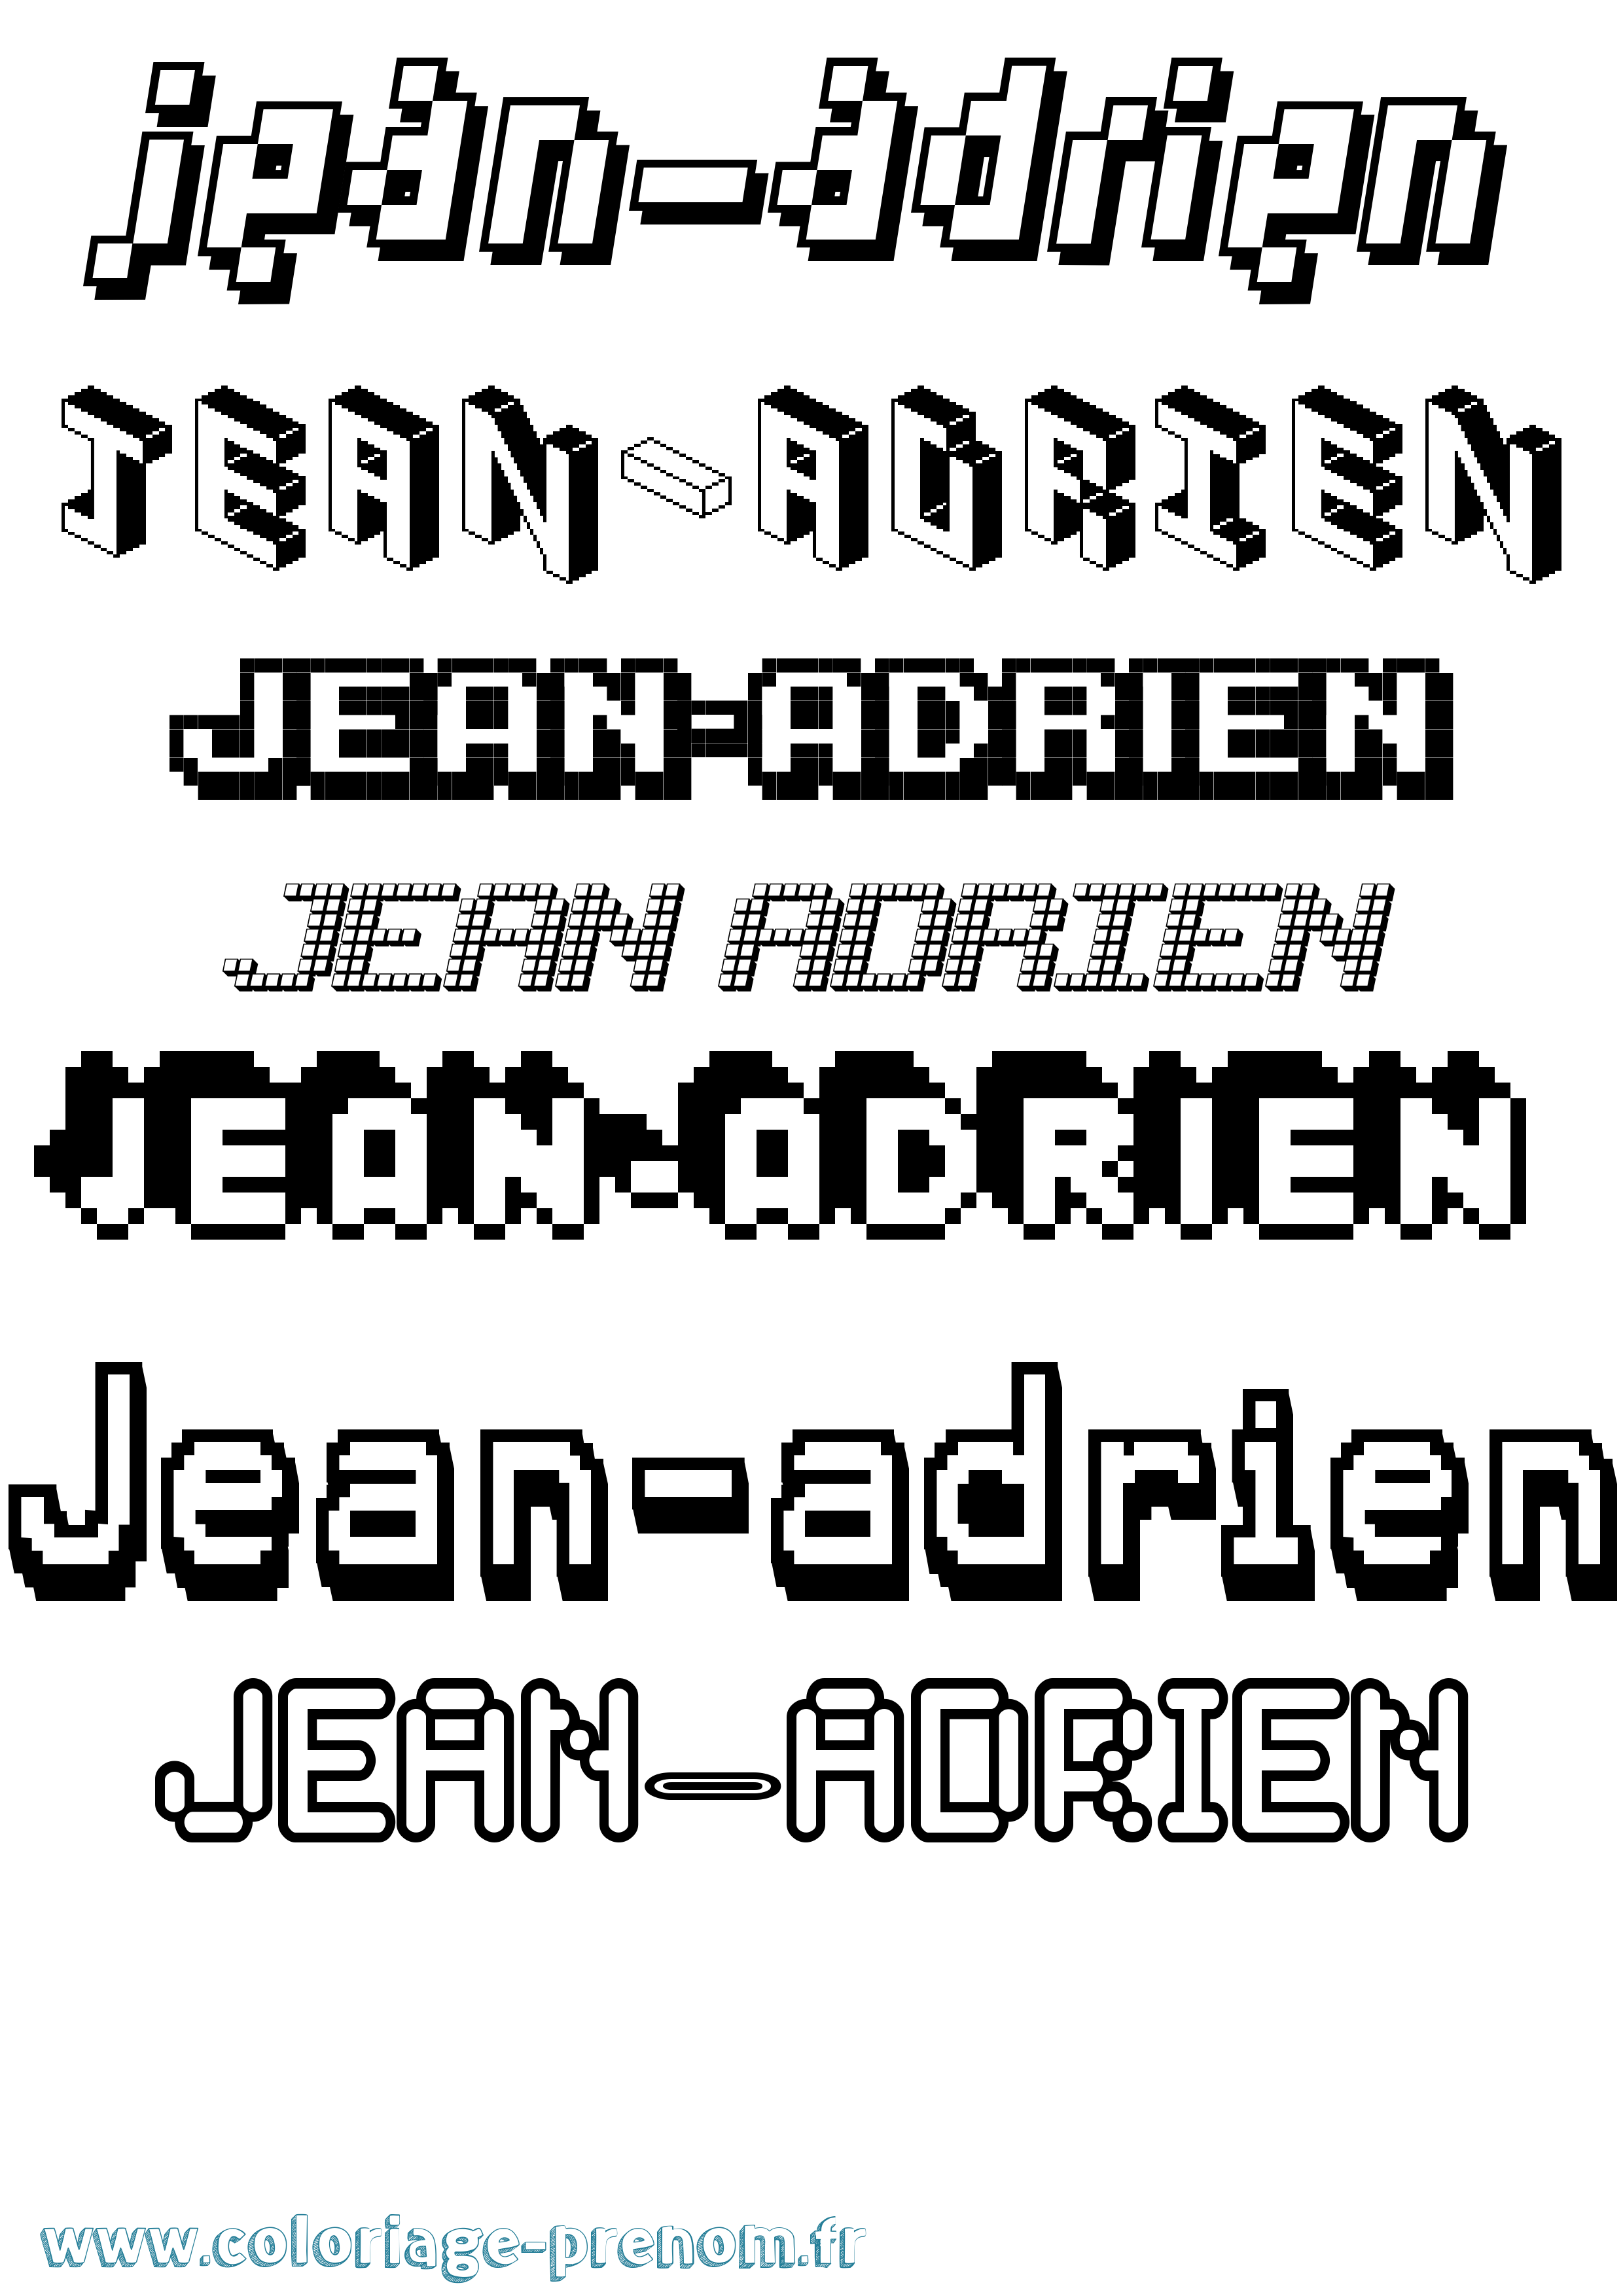 Coloriage prénom Jean-Adrien Pixel